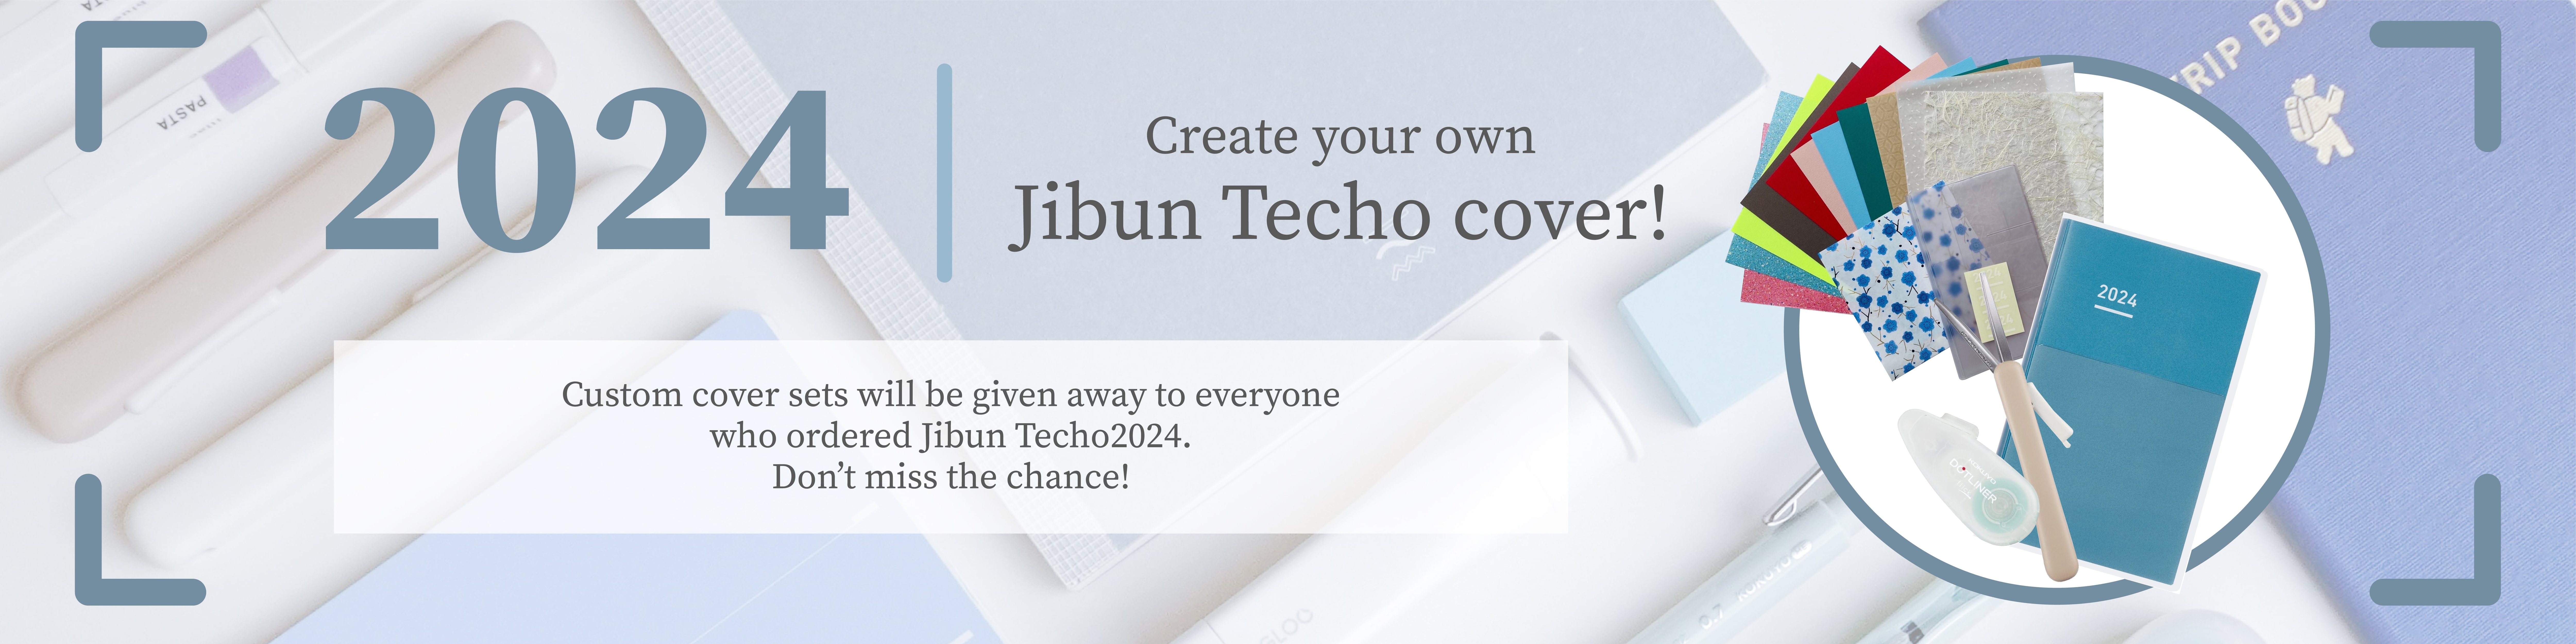 Jibun Techo banner